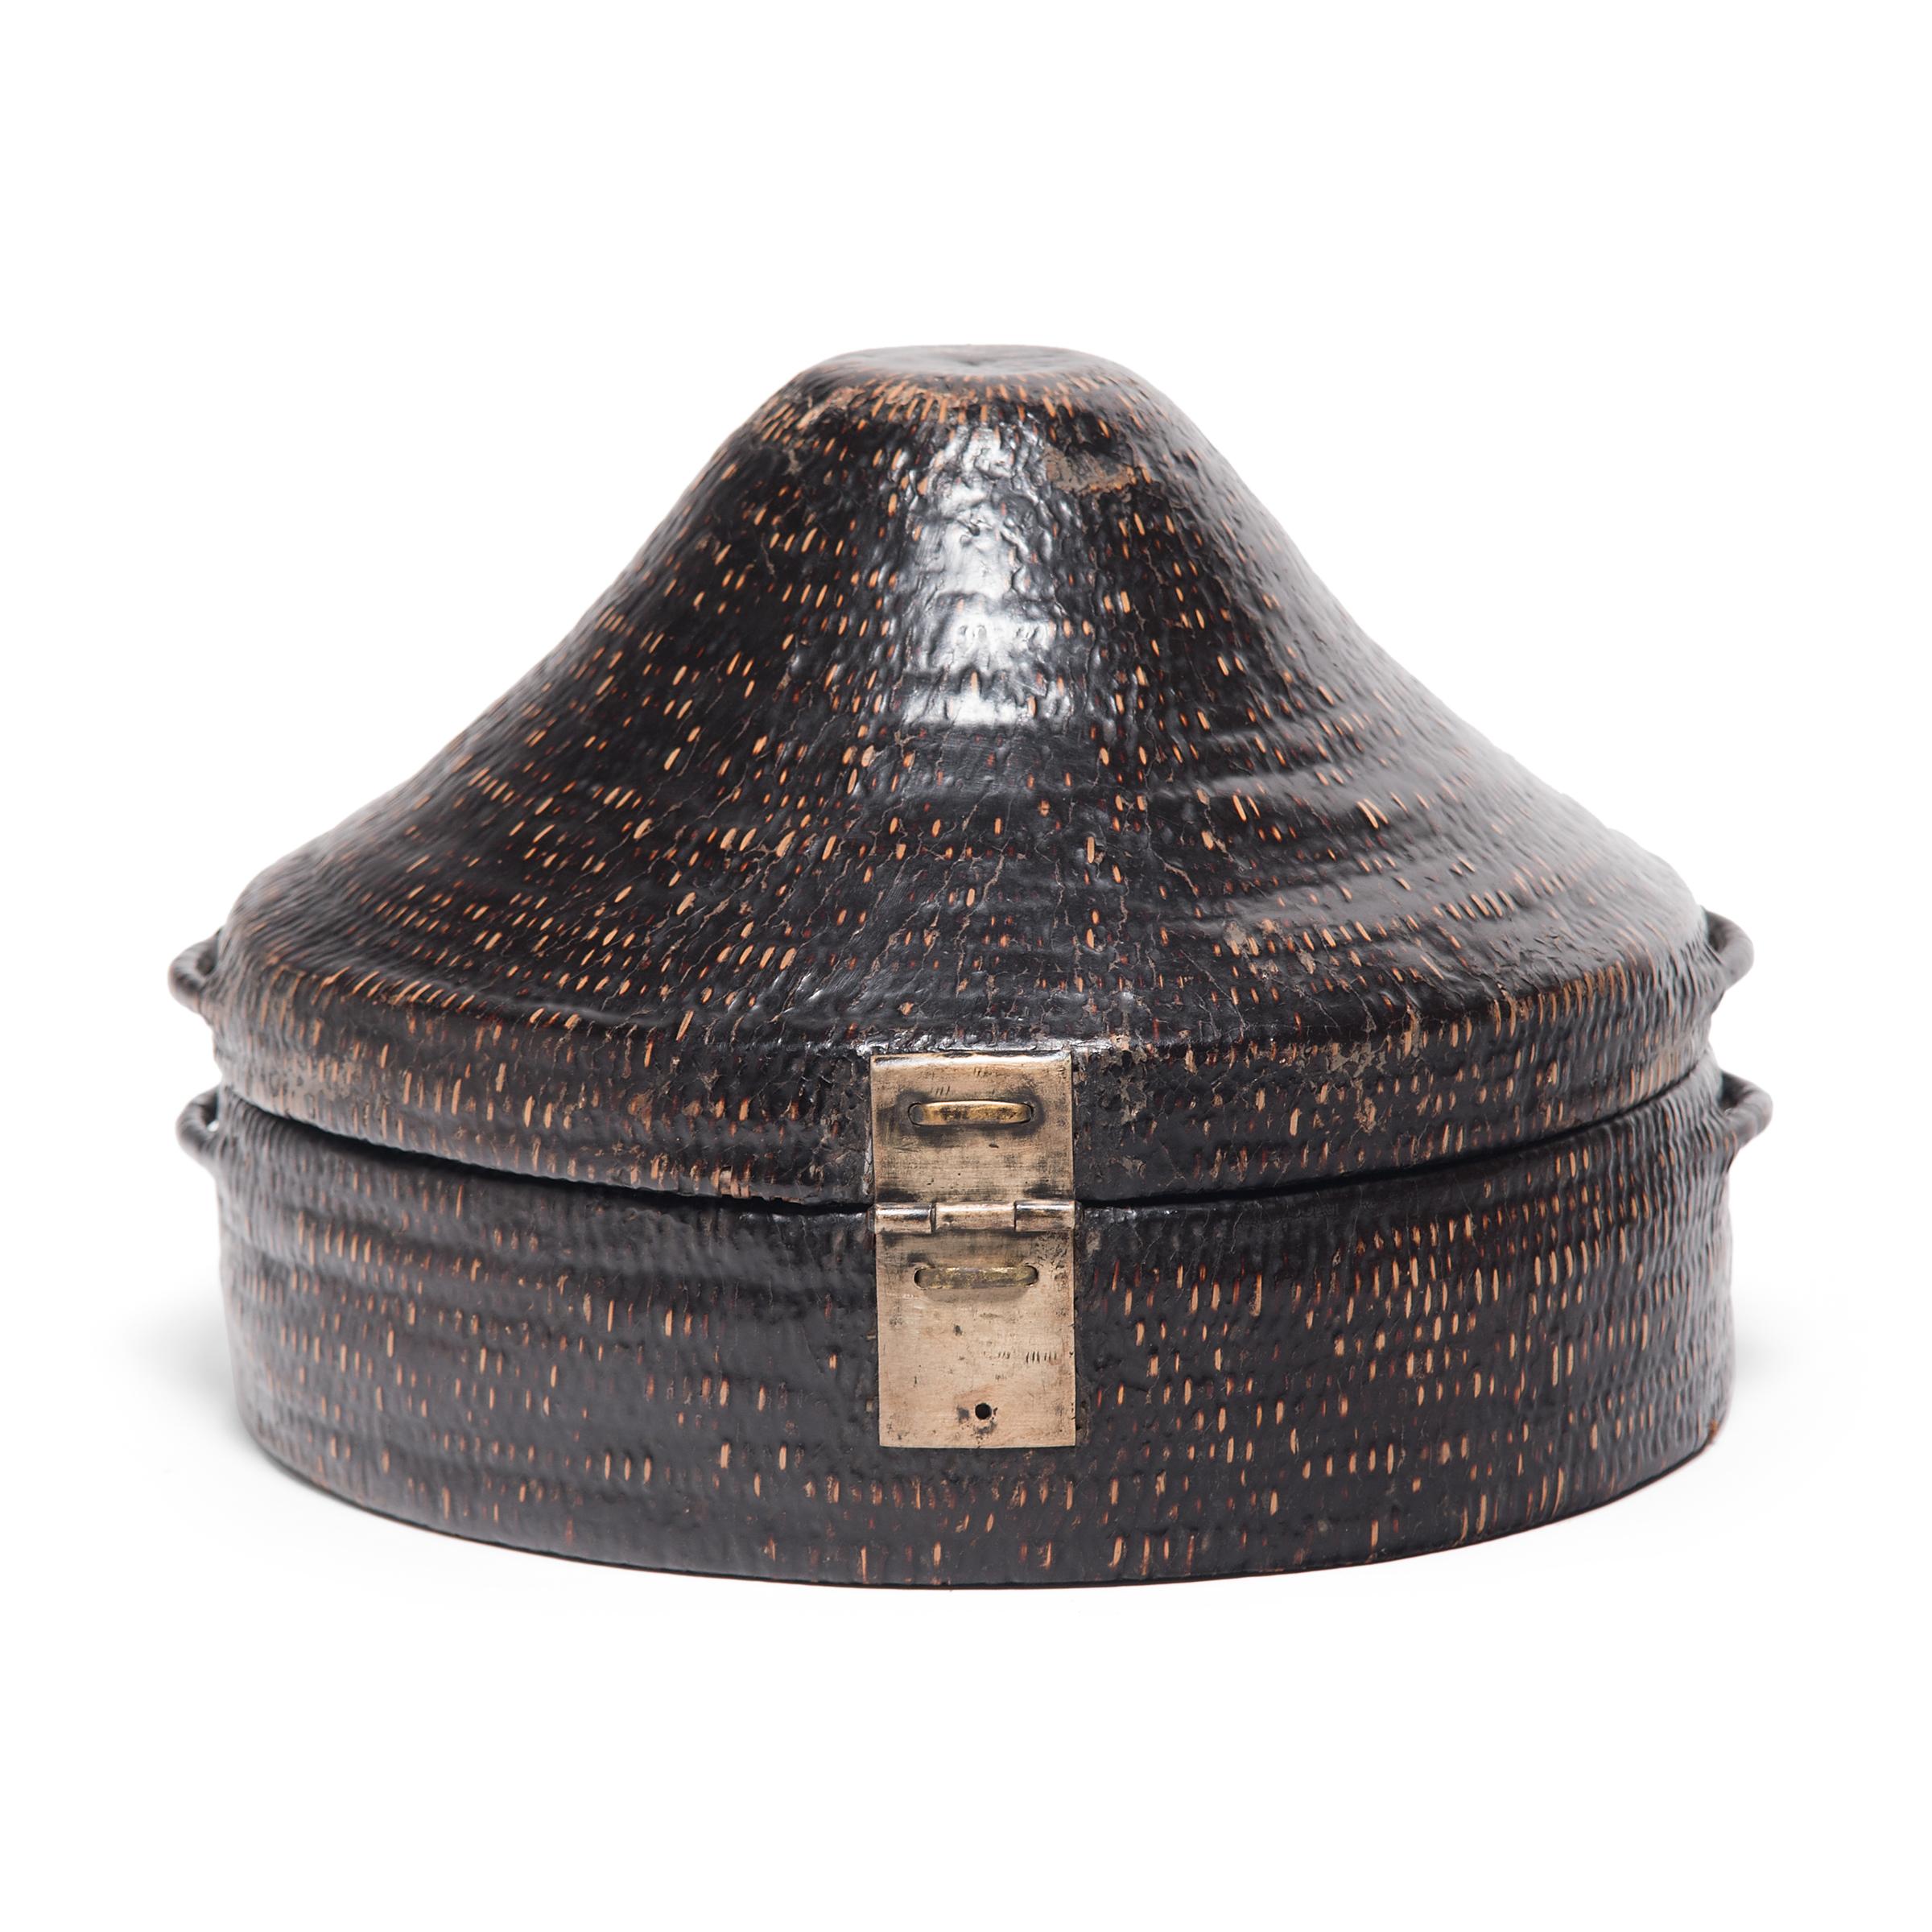 Qing Chinese Woven Summer Hat Box, circa 1850